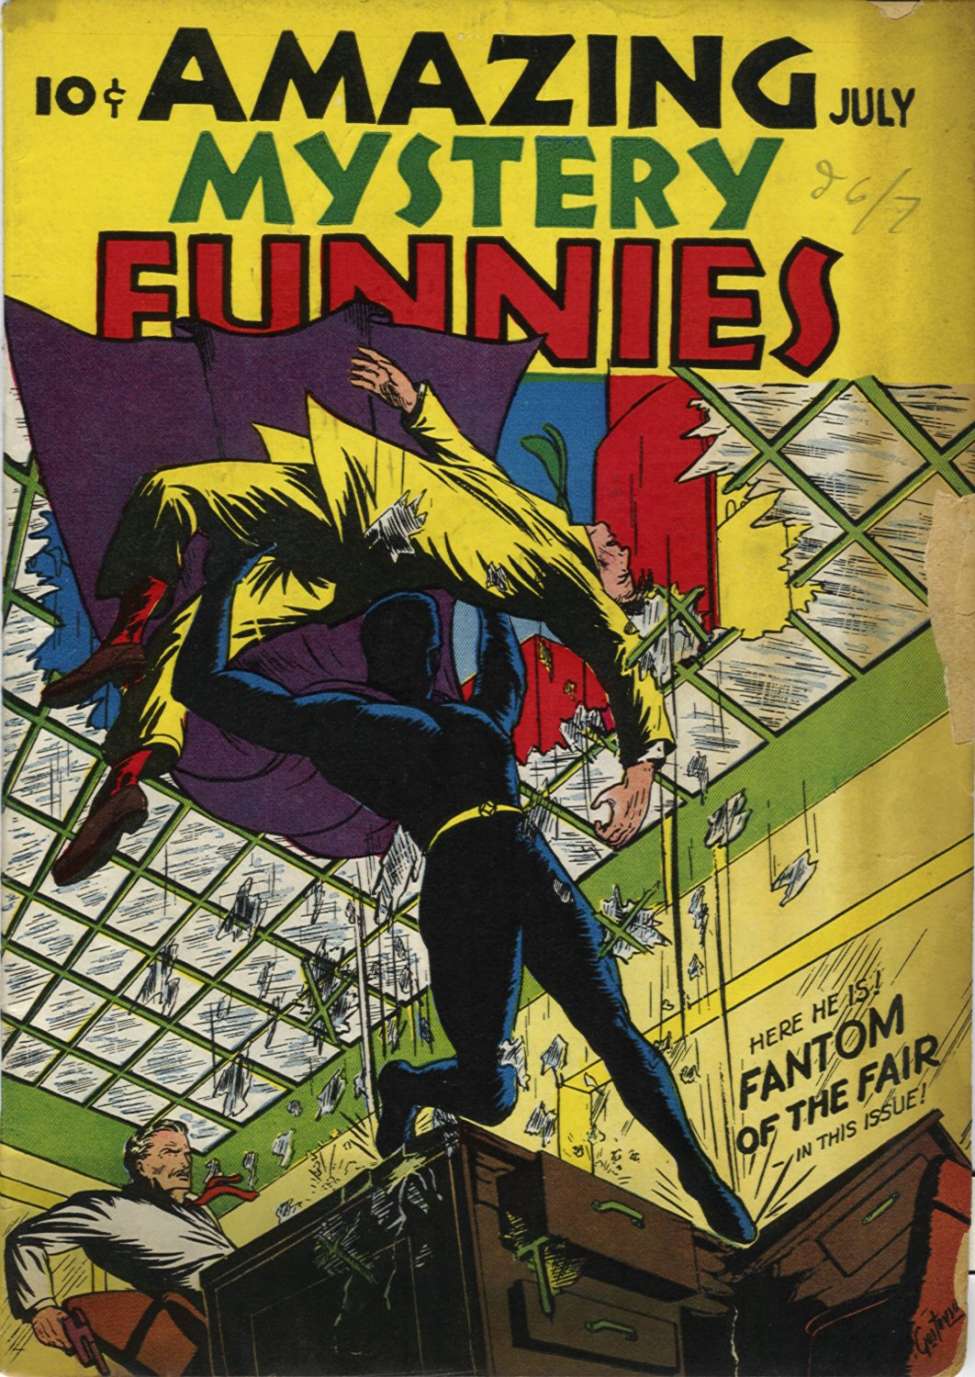 Book Cover For Fantom of the Fair Archive Vol 1 (Centaur)